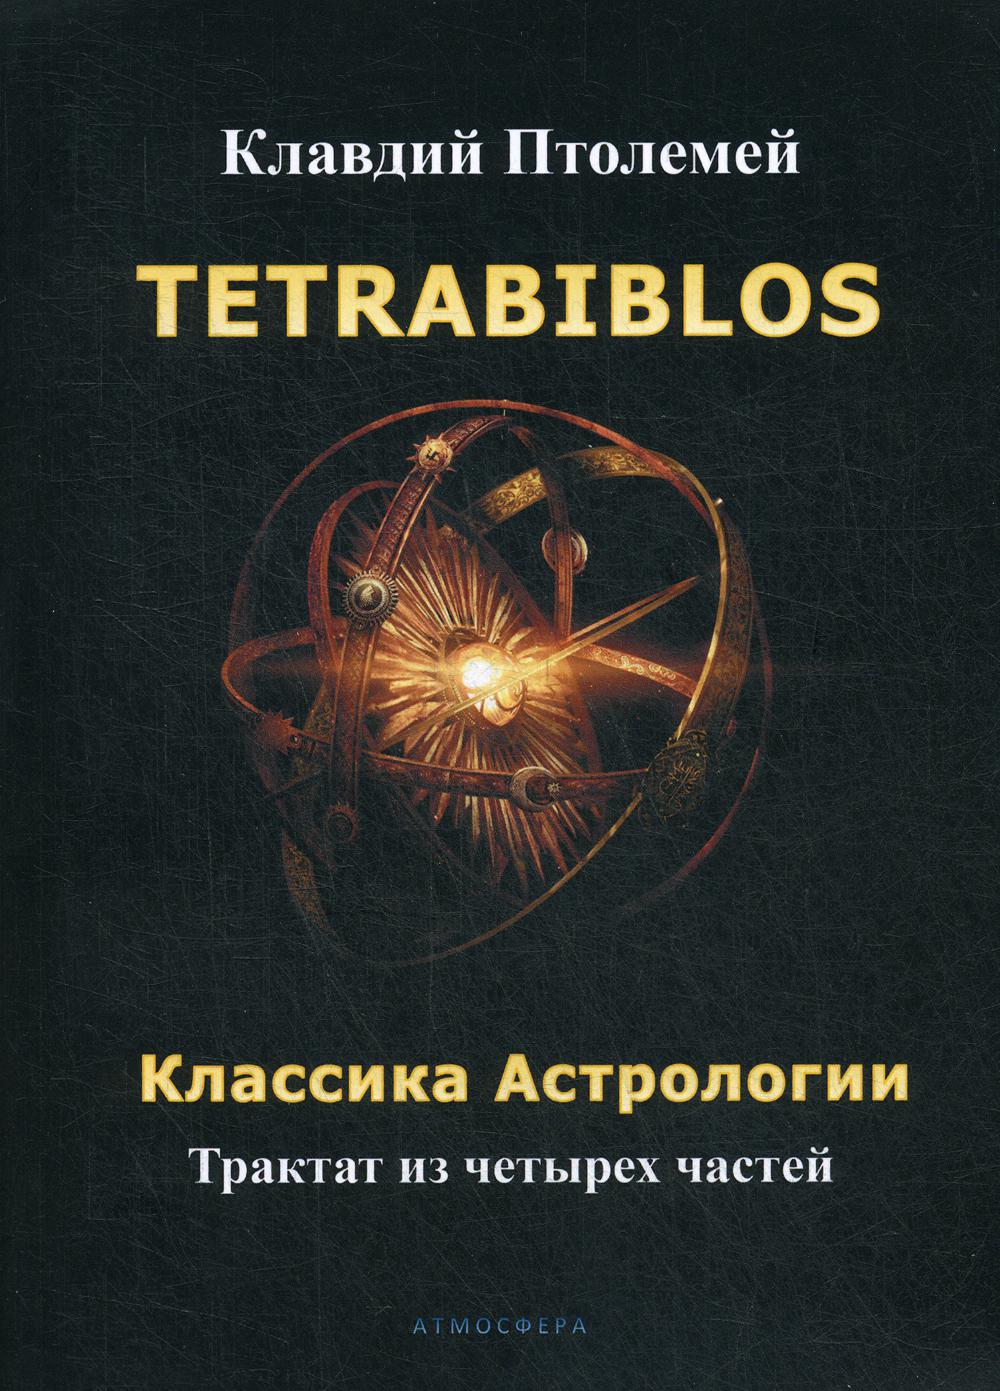 Tetrabiblos. Классика астрологии